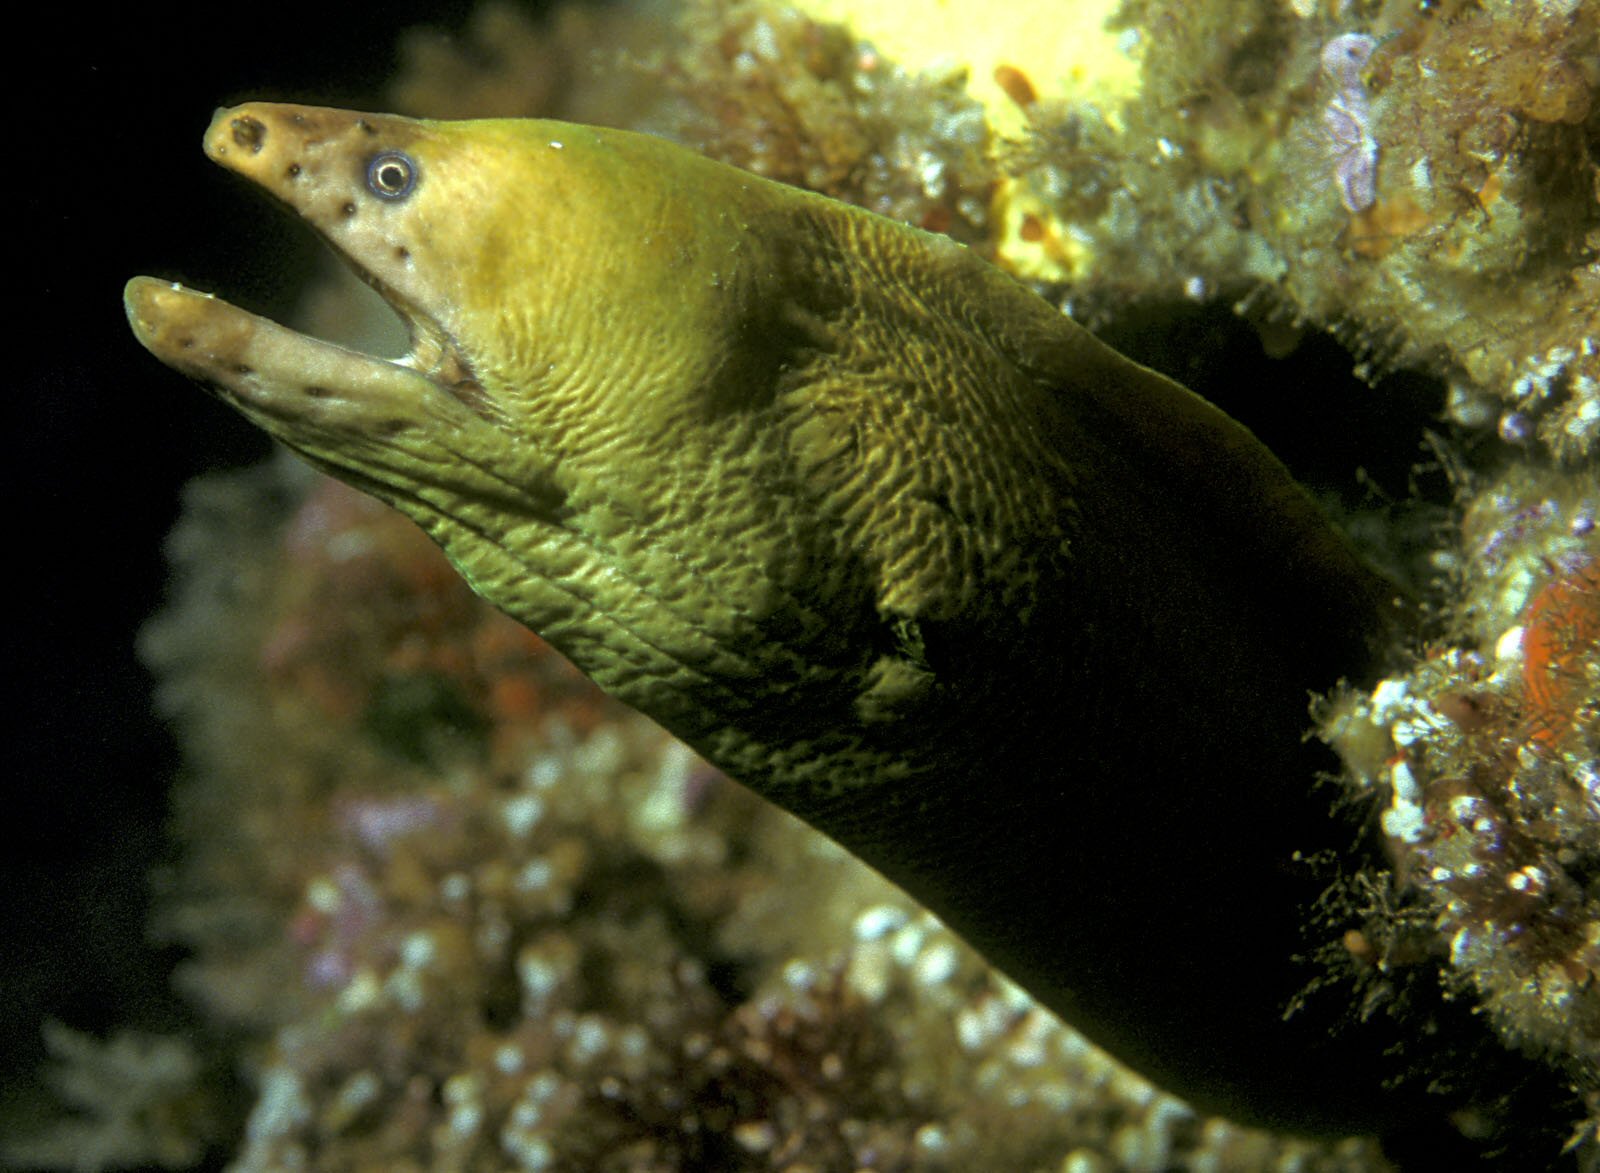 Yellow Moray Eel (Gymnothorax prasinus) - Wiki; Image ONLY